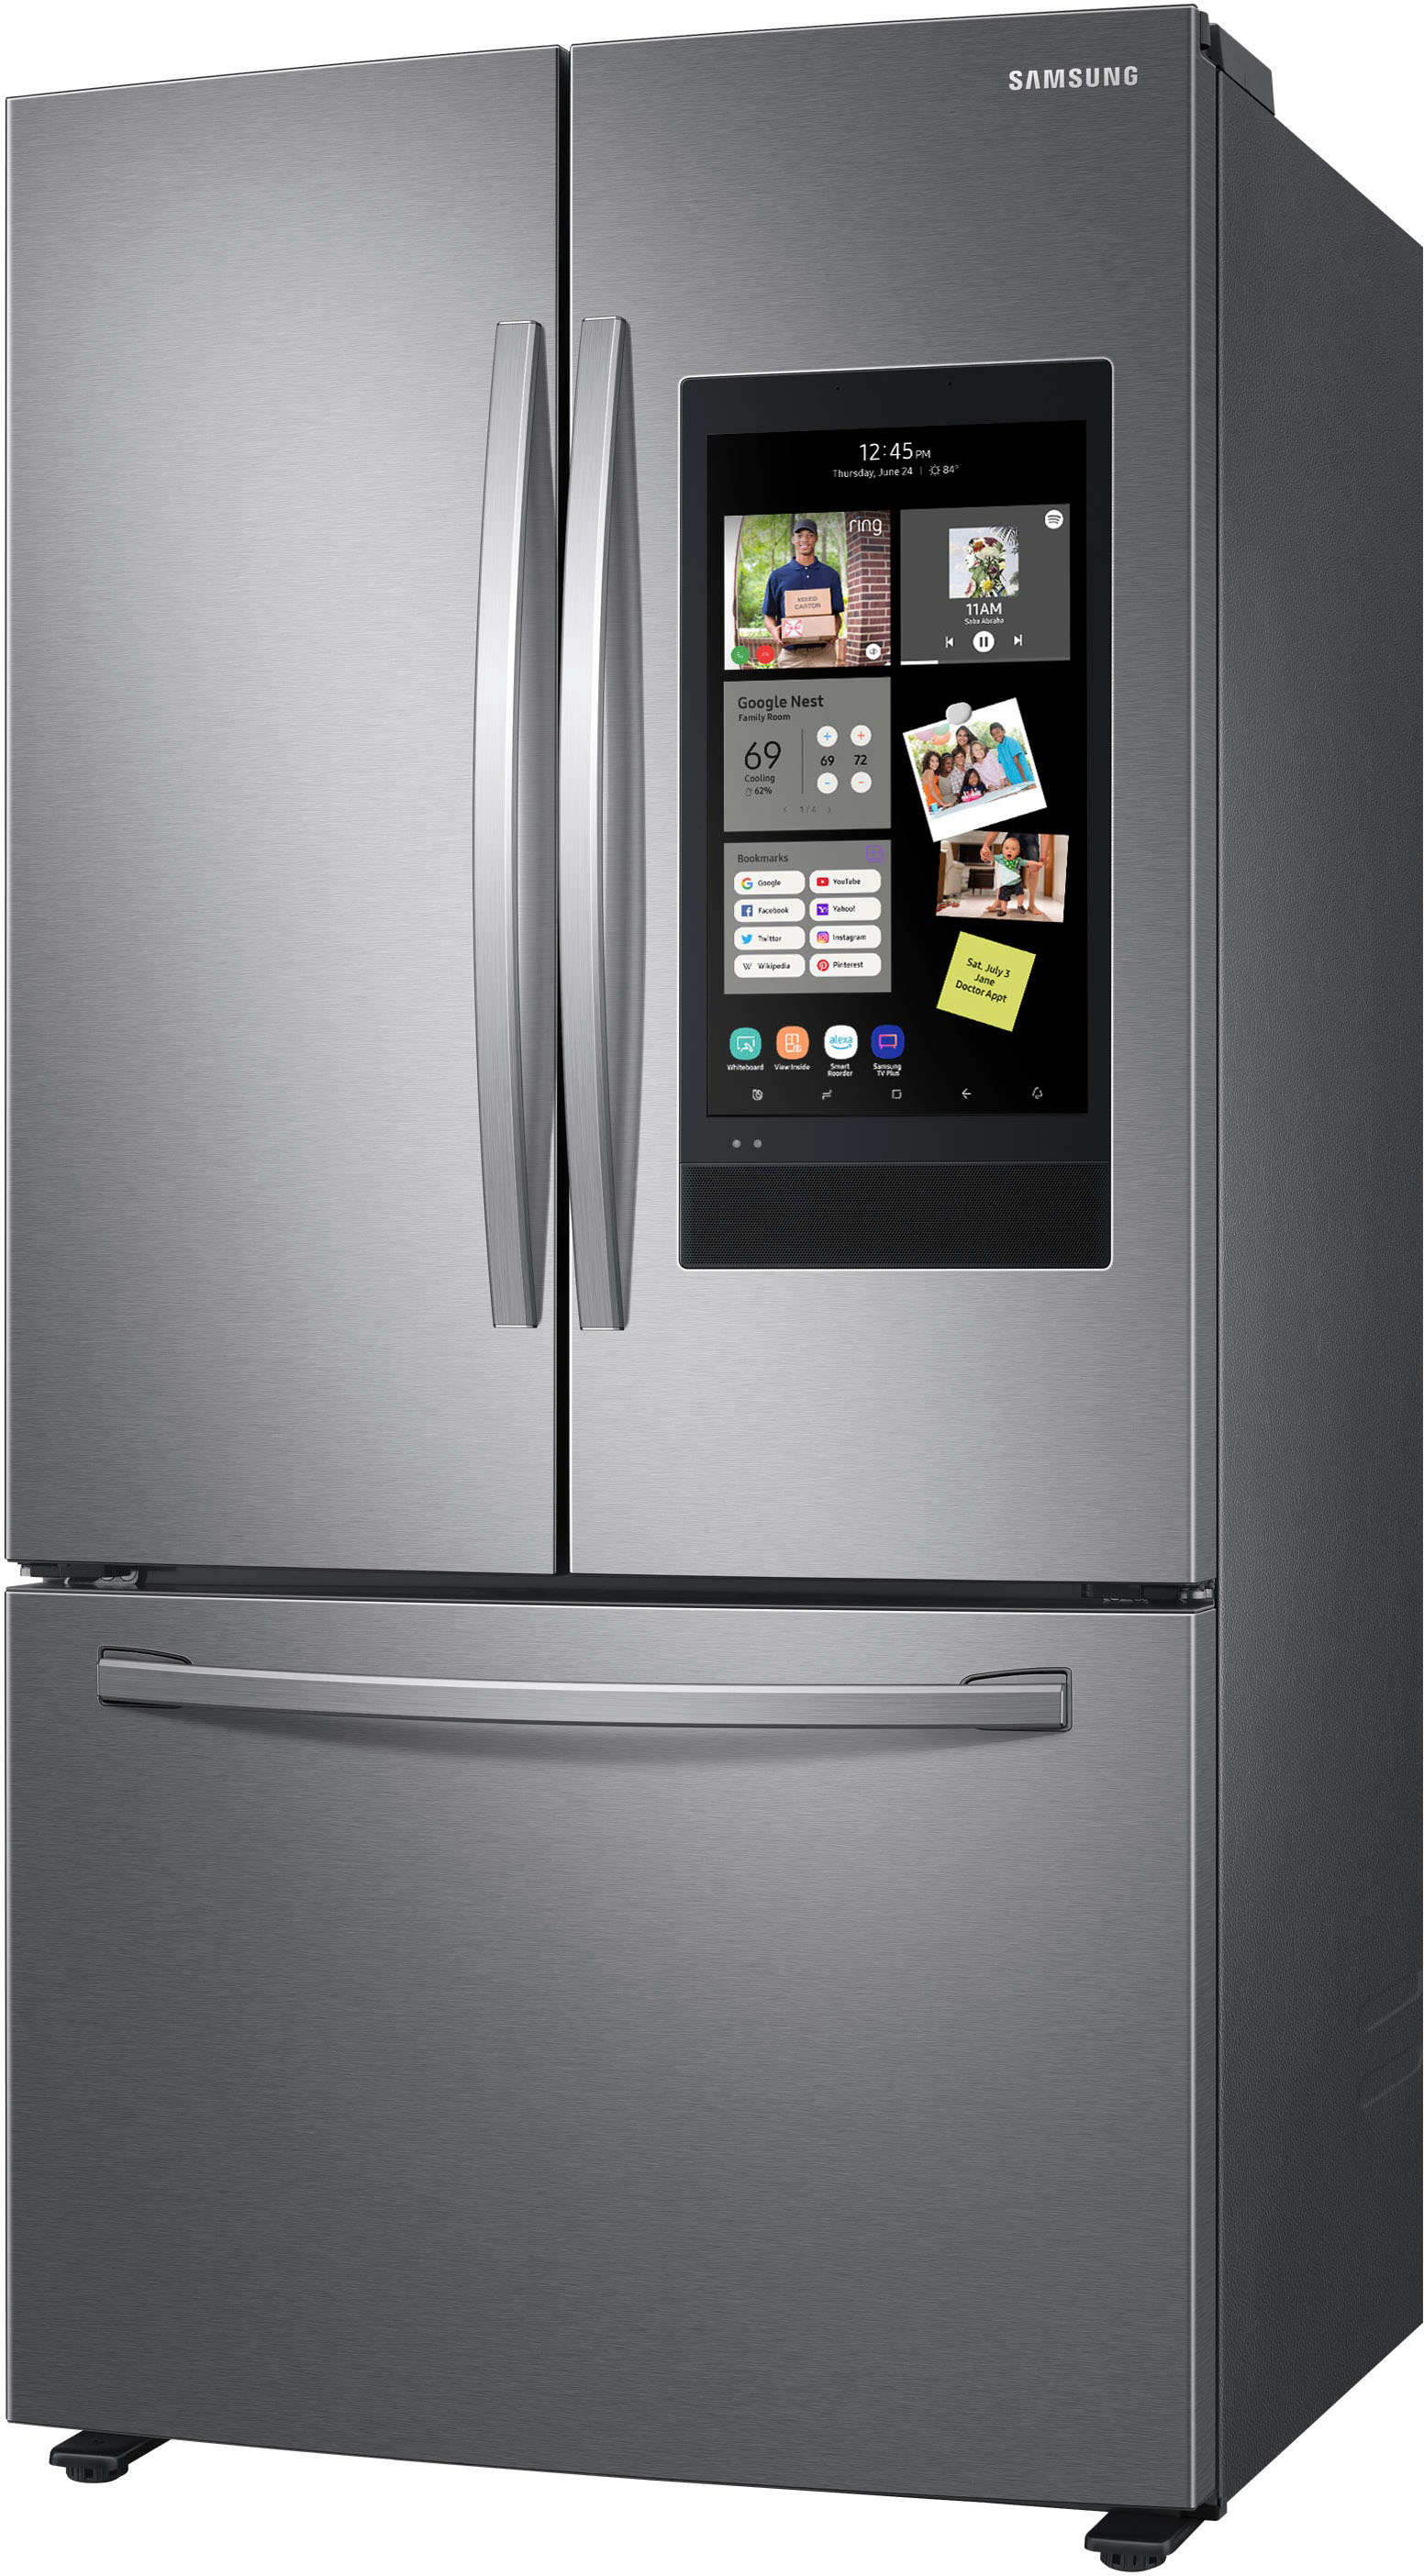 Samsung 28 Cu Ft 3 Door French Door Refrigerator With Family Hub Stainless Steel Rf28t5f01sr Best Buy